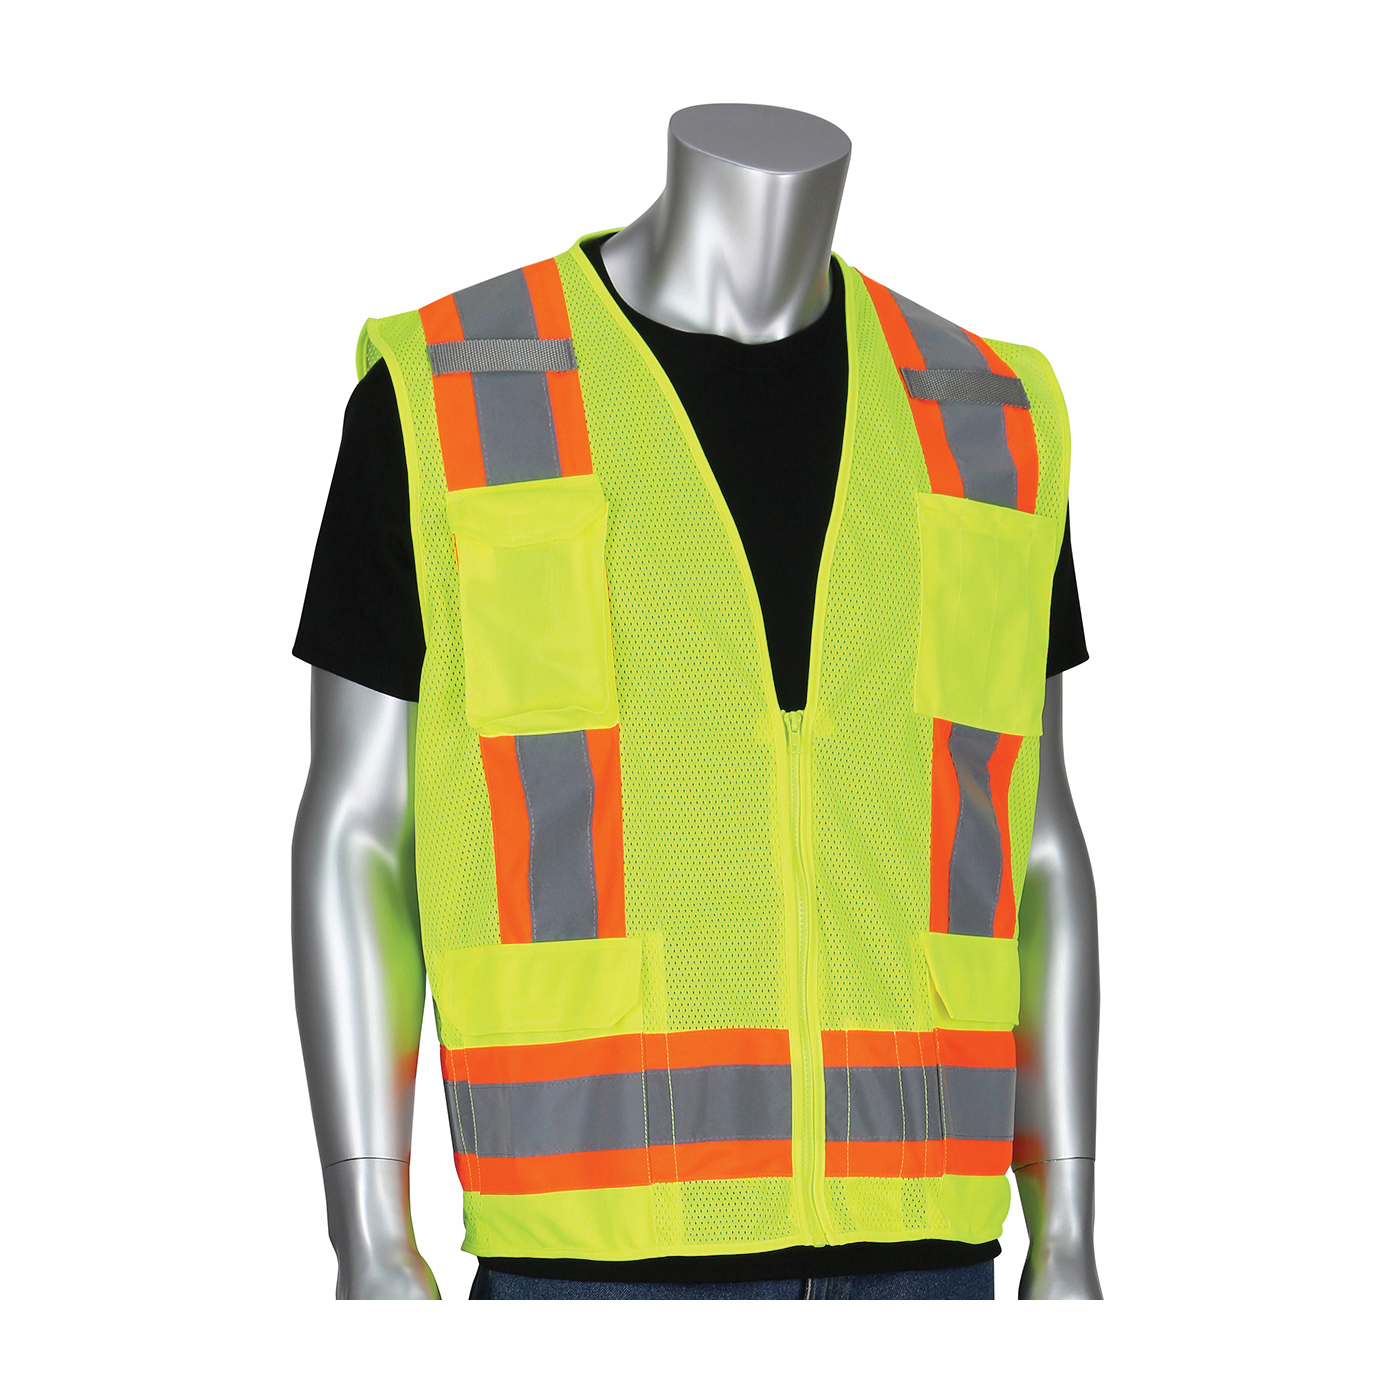 PIP® 302-0500M-LY/S 2-Tone Surveyor Safety Vest, S, Hi-Viz Lime Yellow, Polyester, Zipper Closure, 11 Pockets, ANSI Class: Class 2, Specifications Met: ANSI 107 Type R